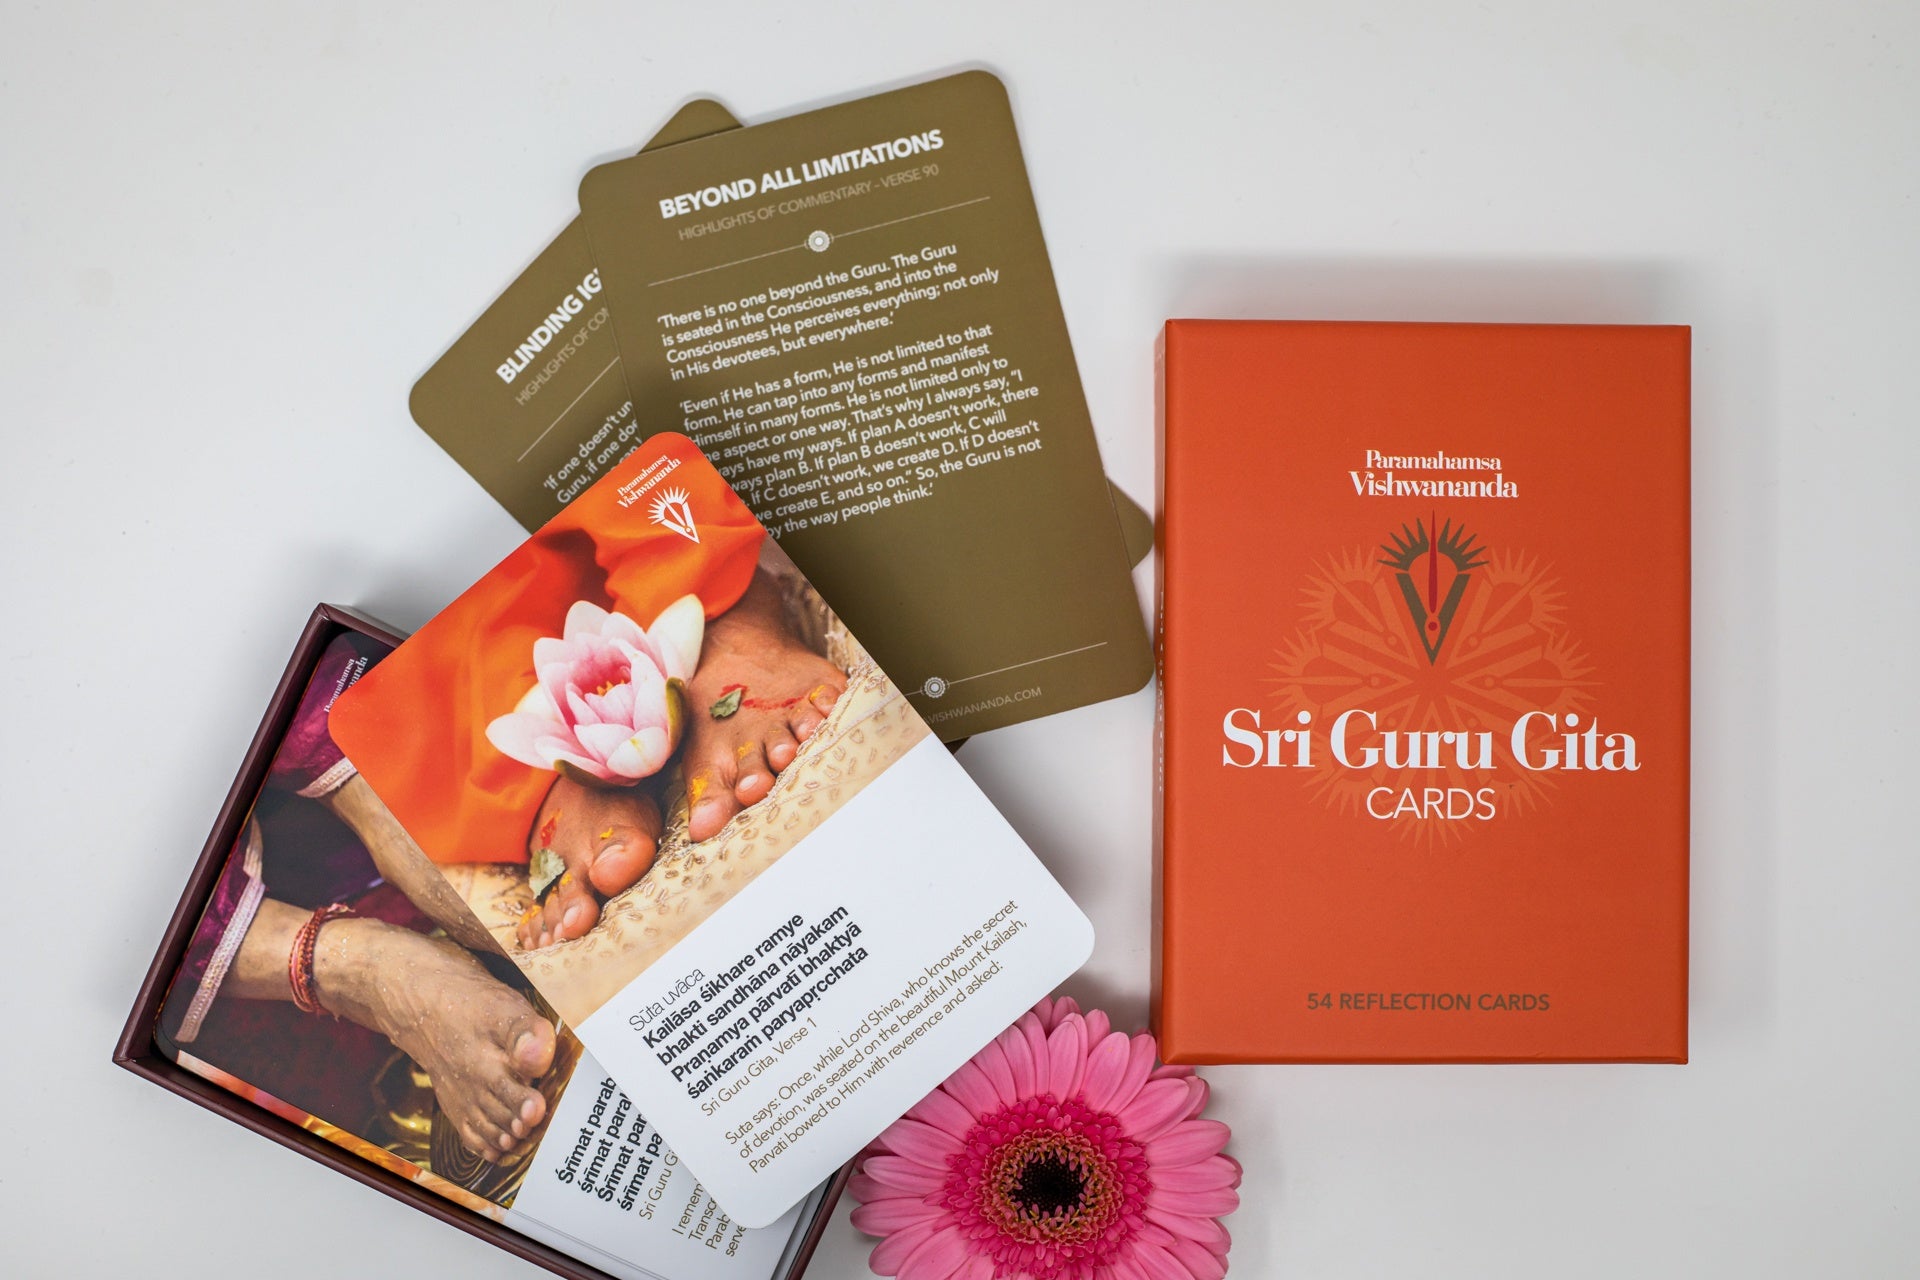 Sri Guru Gita Cards